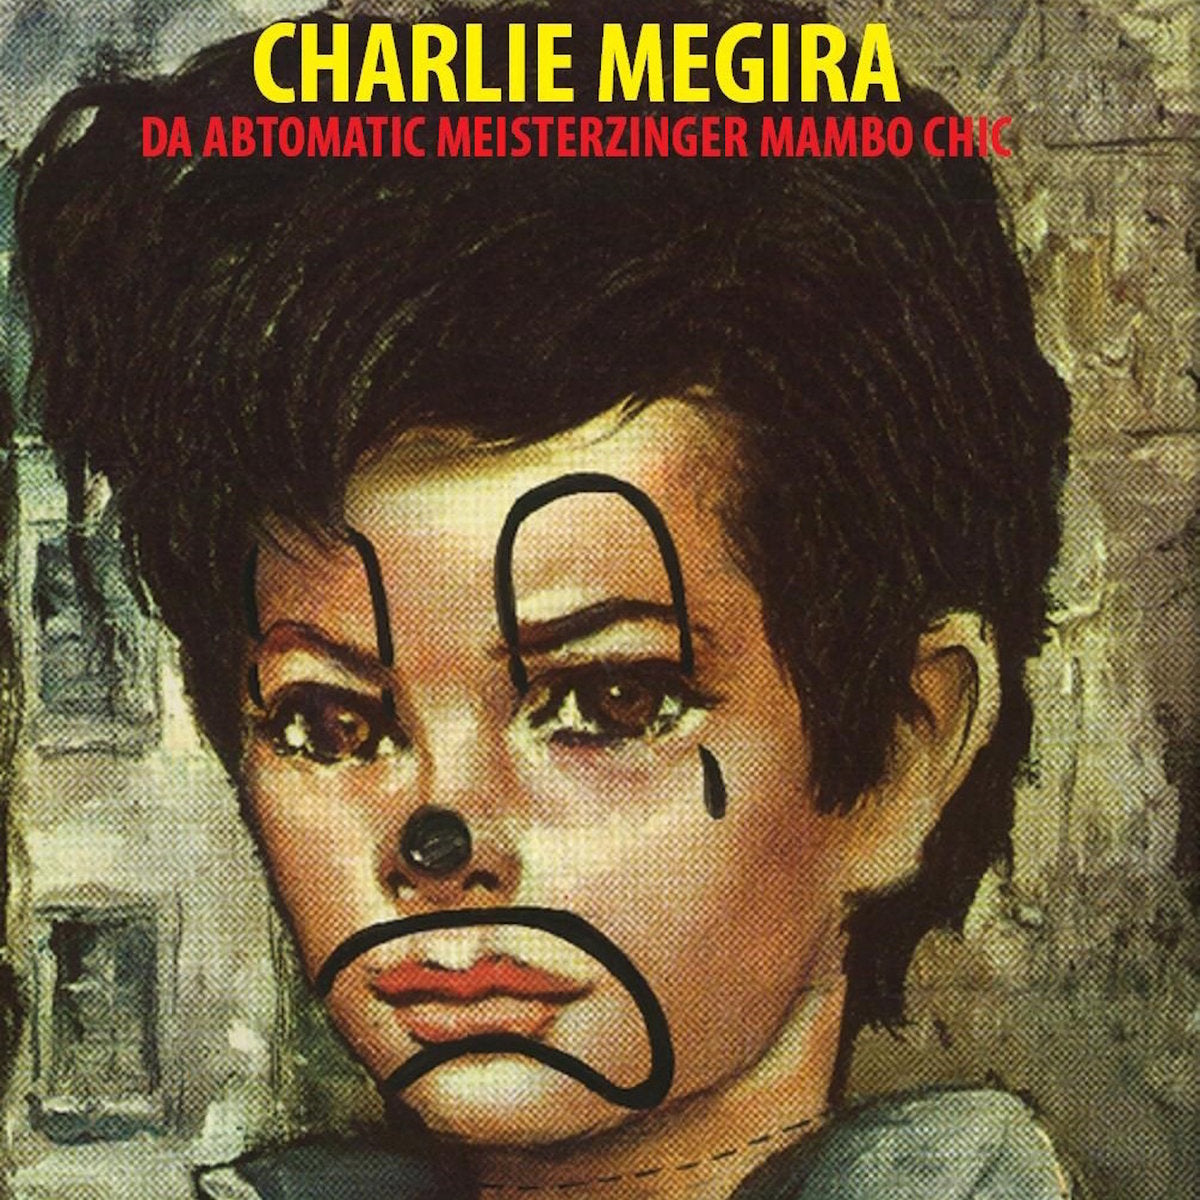 CHARLIE MEGIRA - YESTERDAY, TODAY AND TOMORROW / TOMORROW'S GONE Vinyl EP 7"